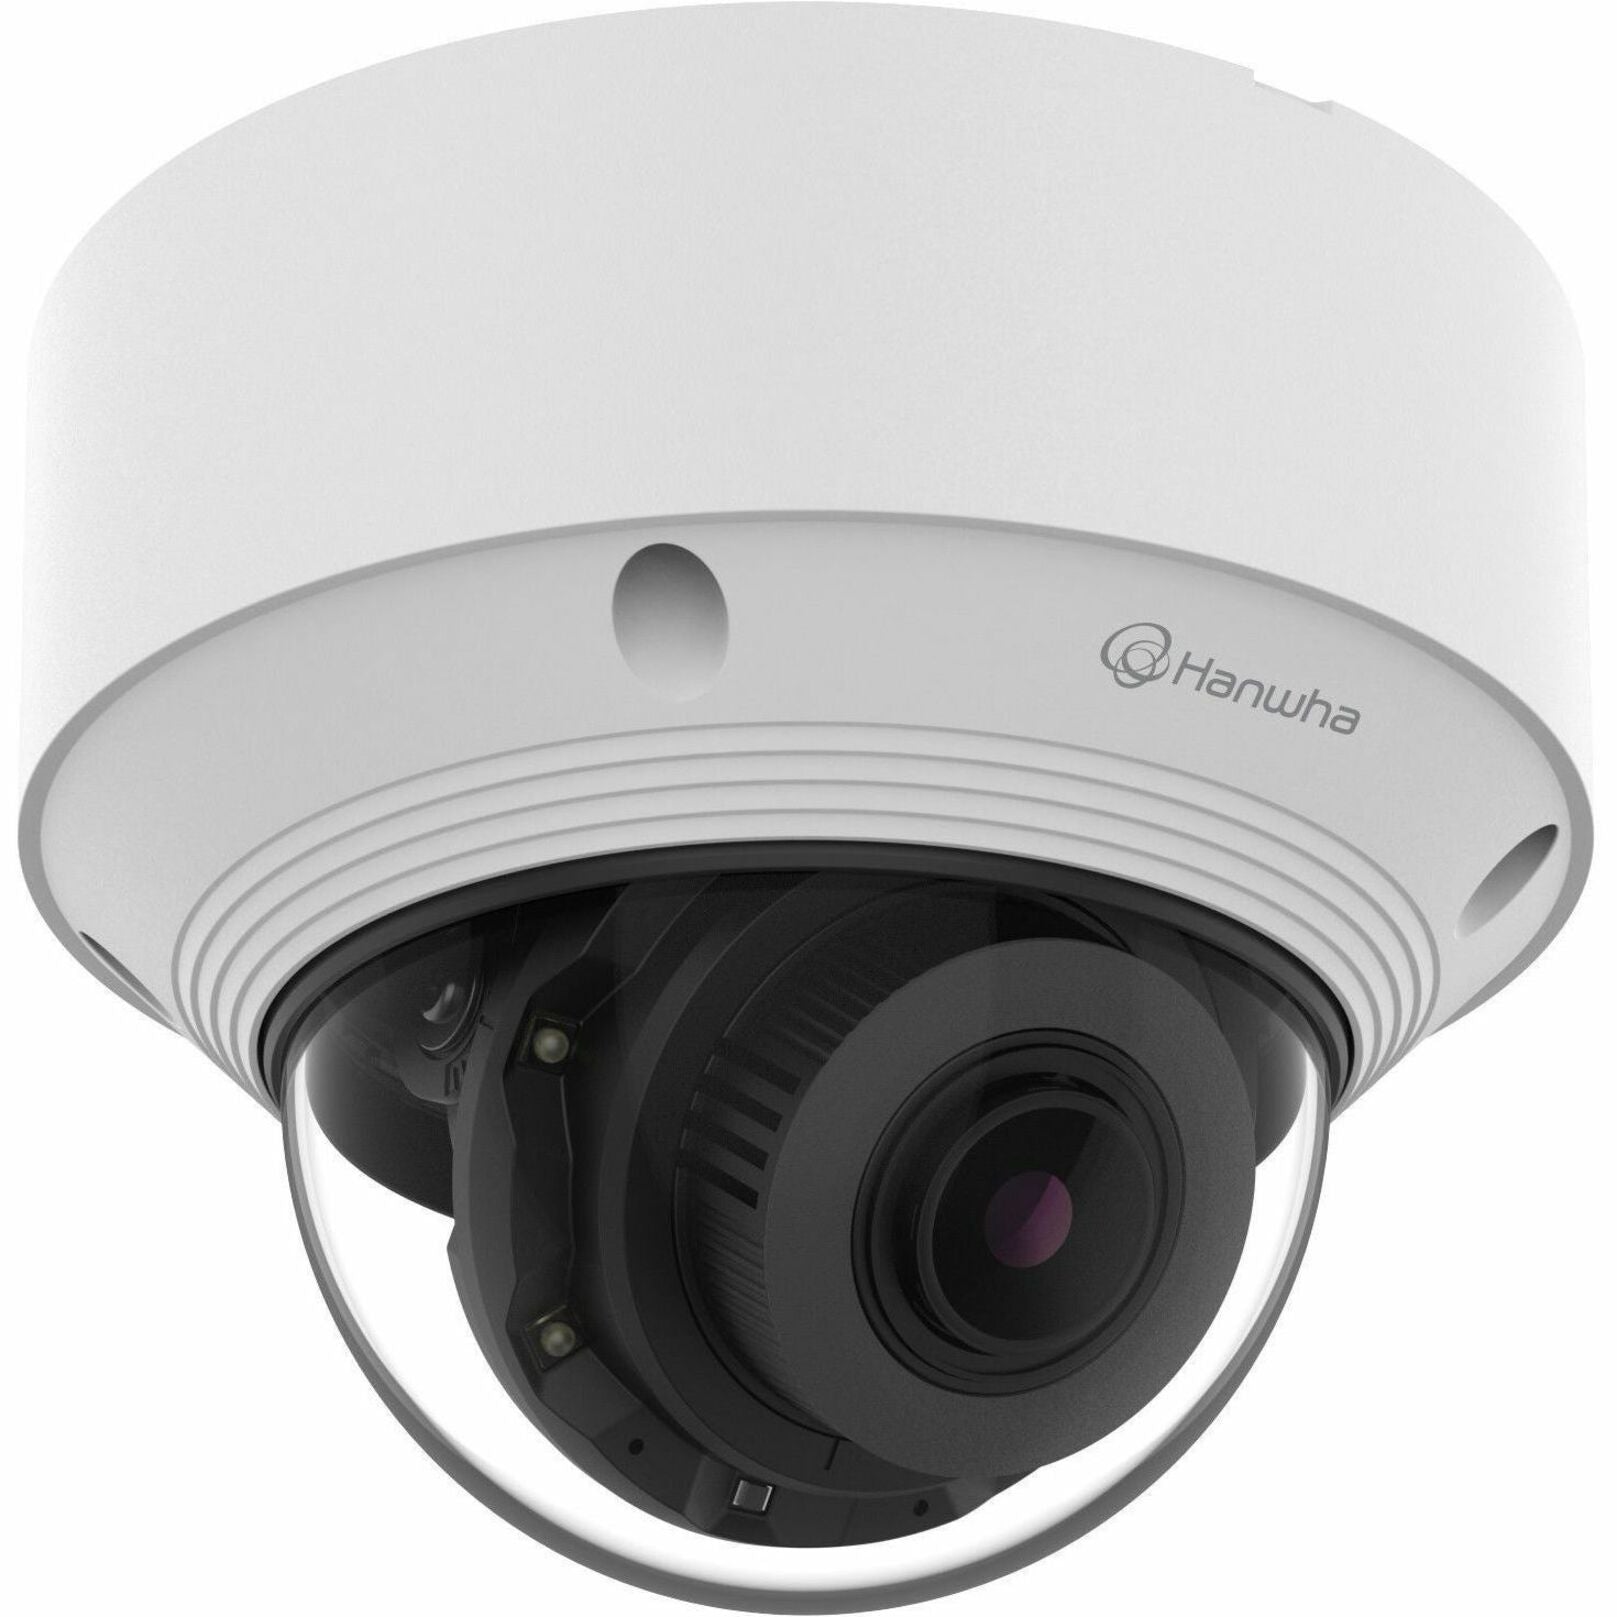 Hanwha QNV-C8083R 5MP IR Vandal Dome Camera, Outdoor Network Camera - Color - Dome